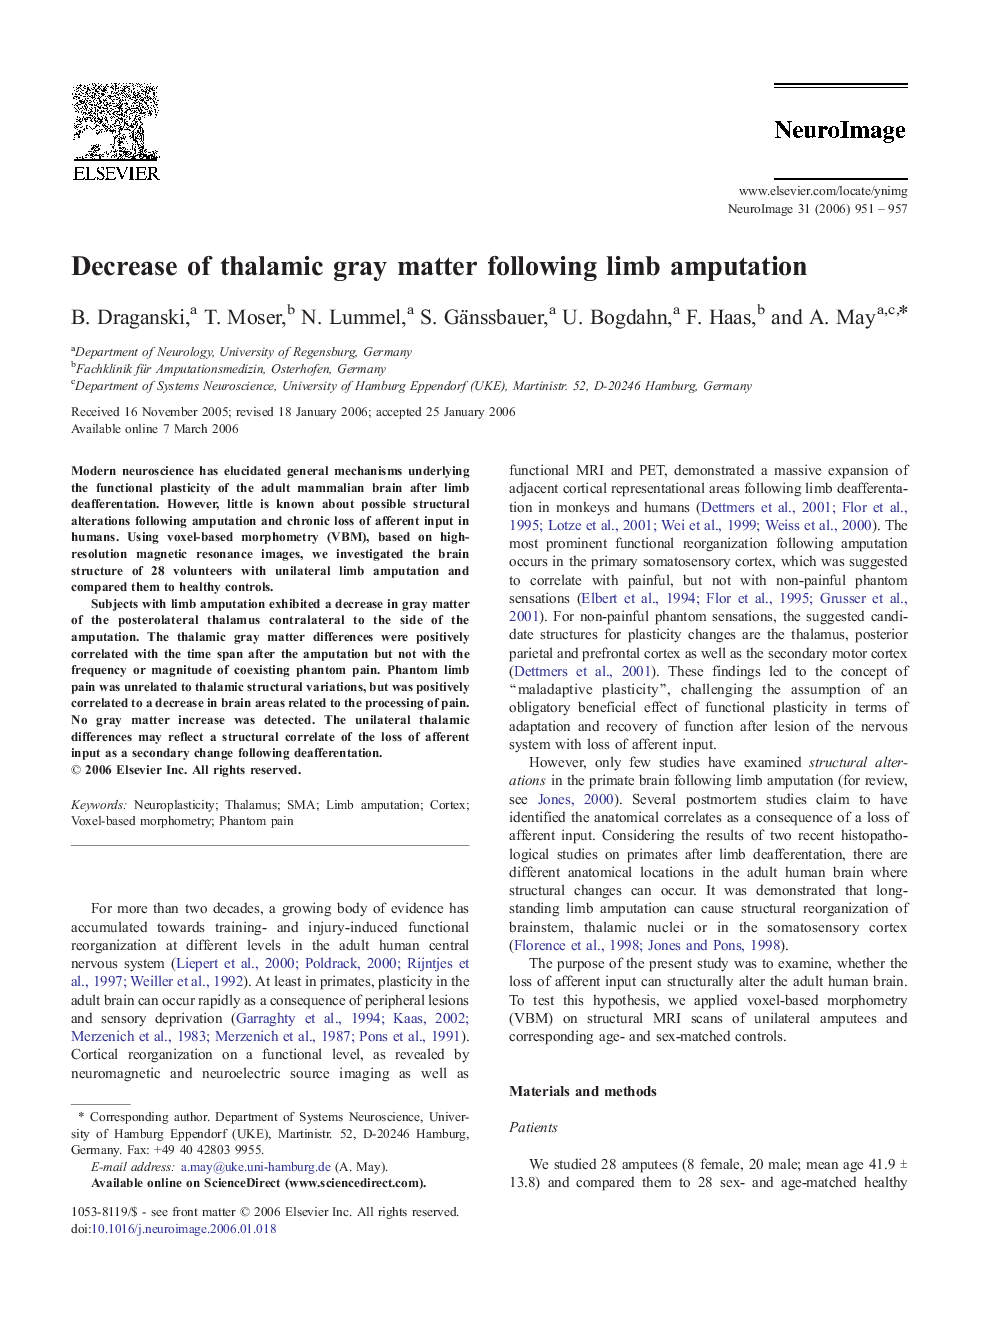 Decrease of thalamic gray matter following limb amputation